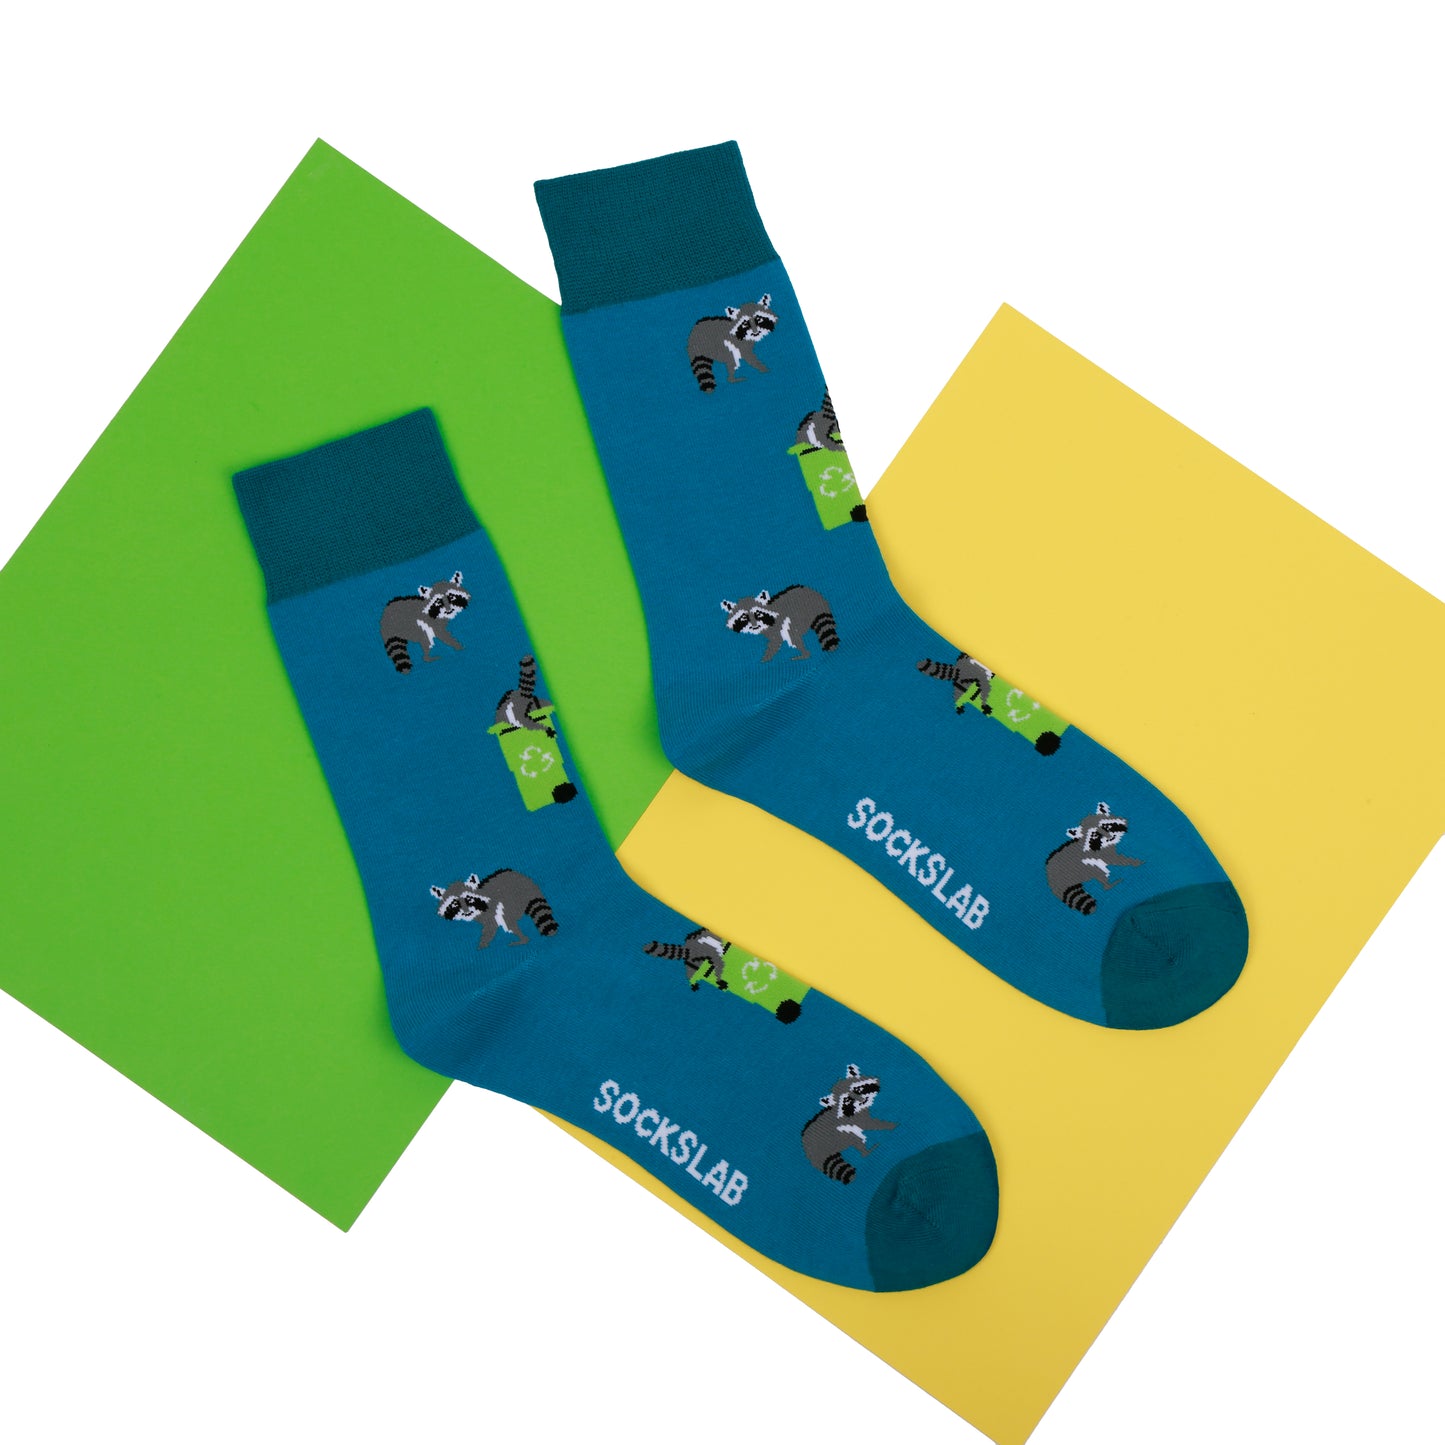 Calcetines con diseño Socks Lab - Mapache